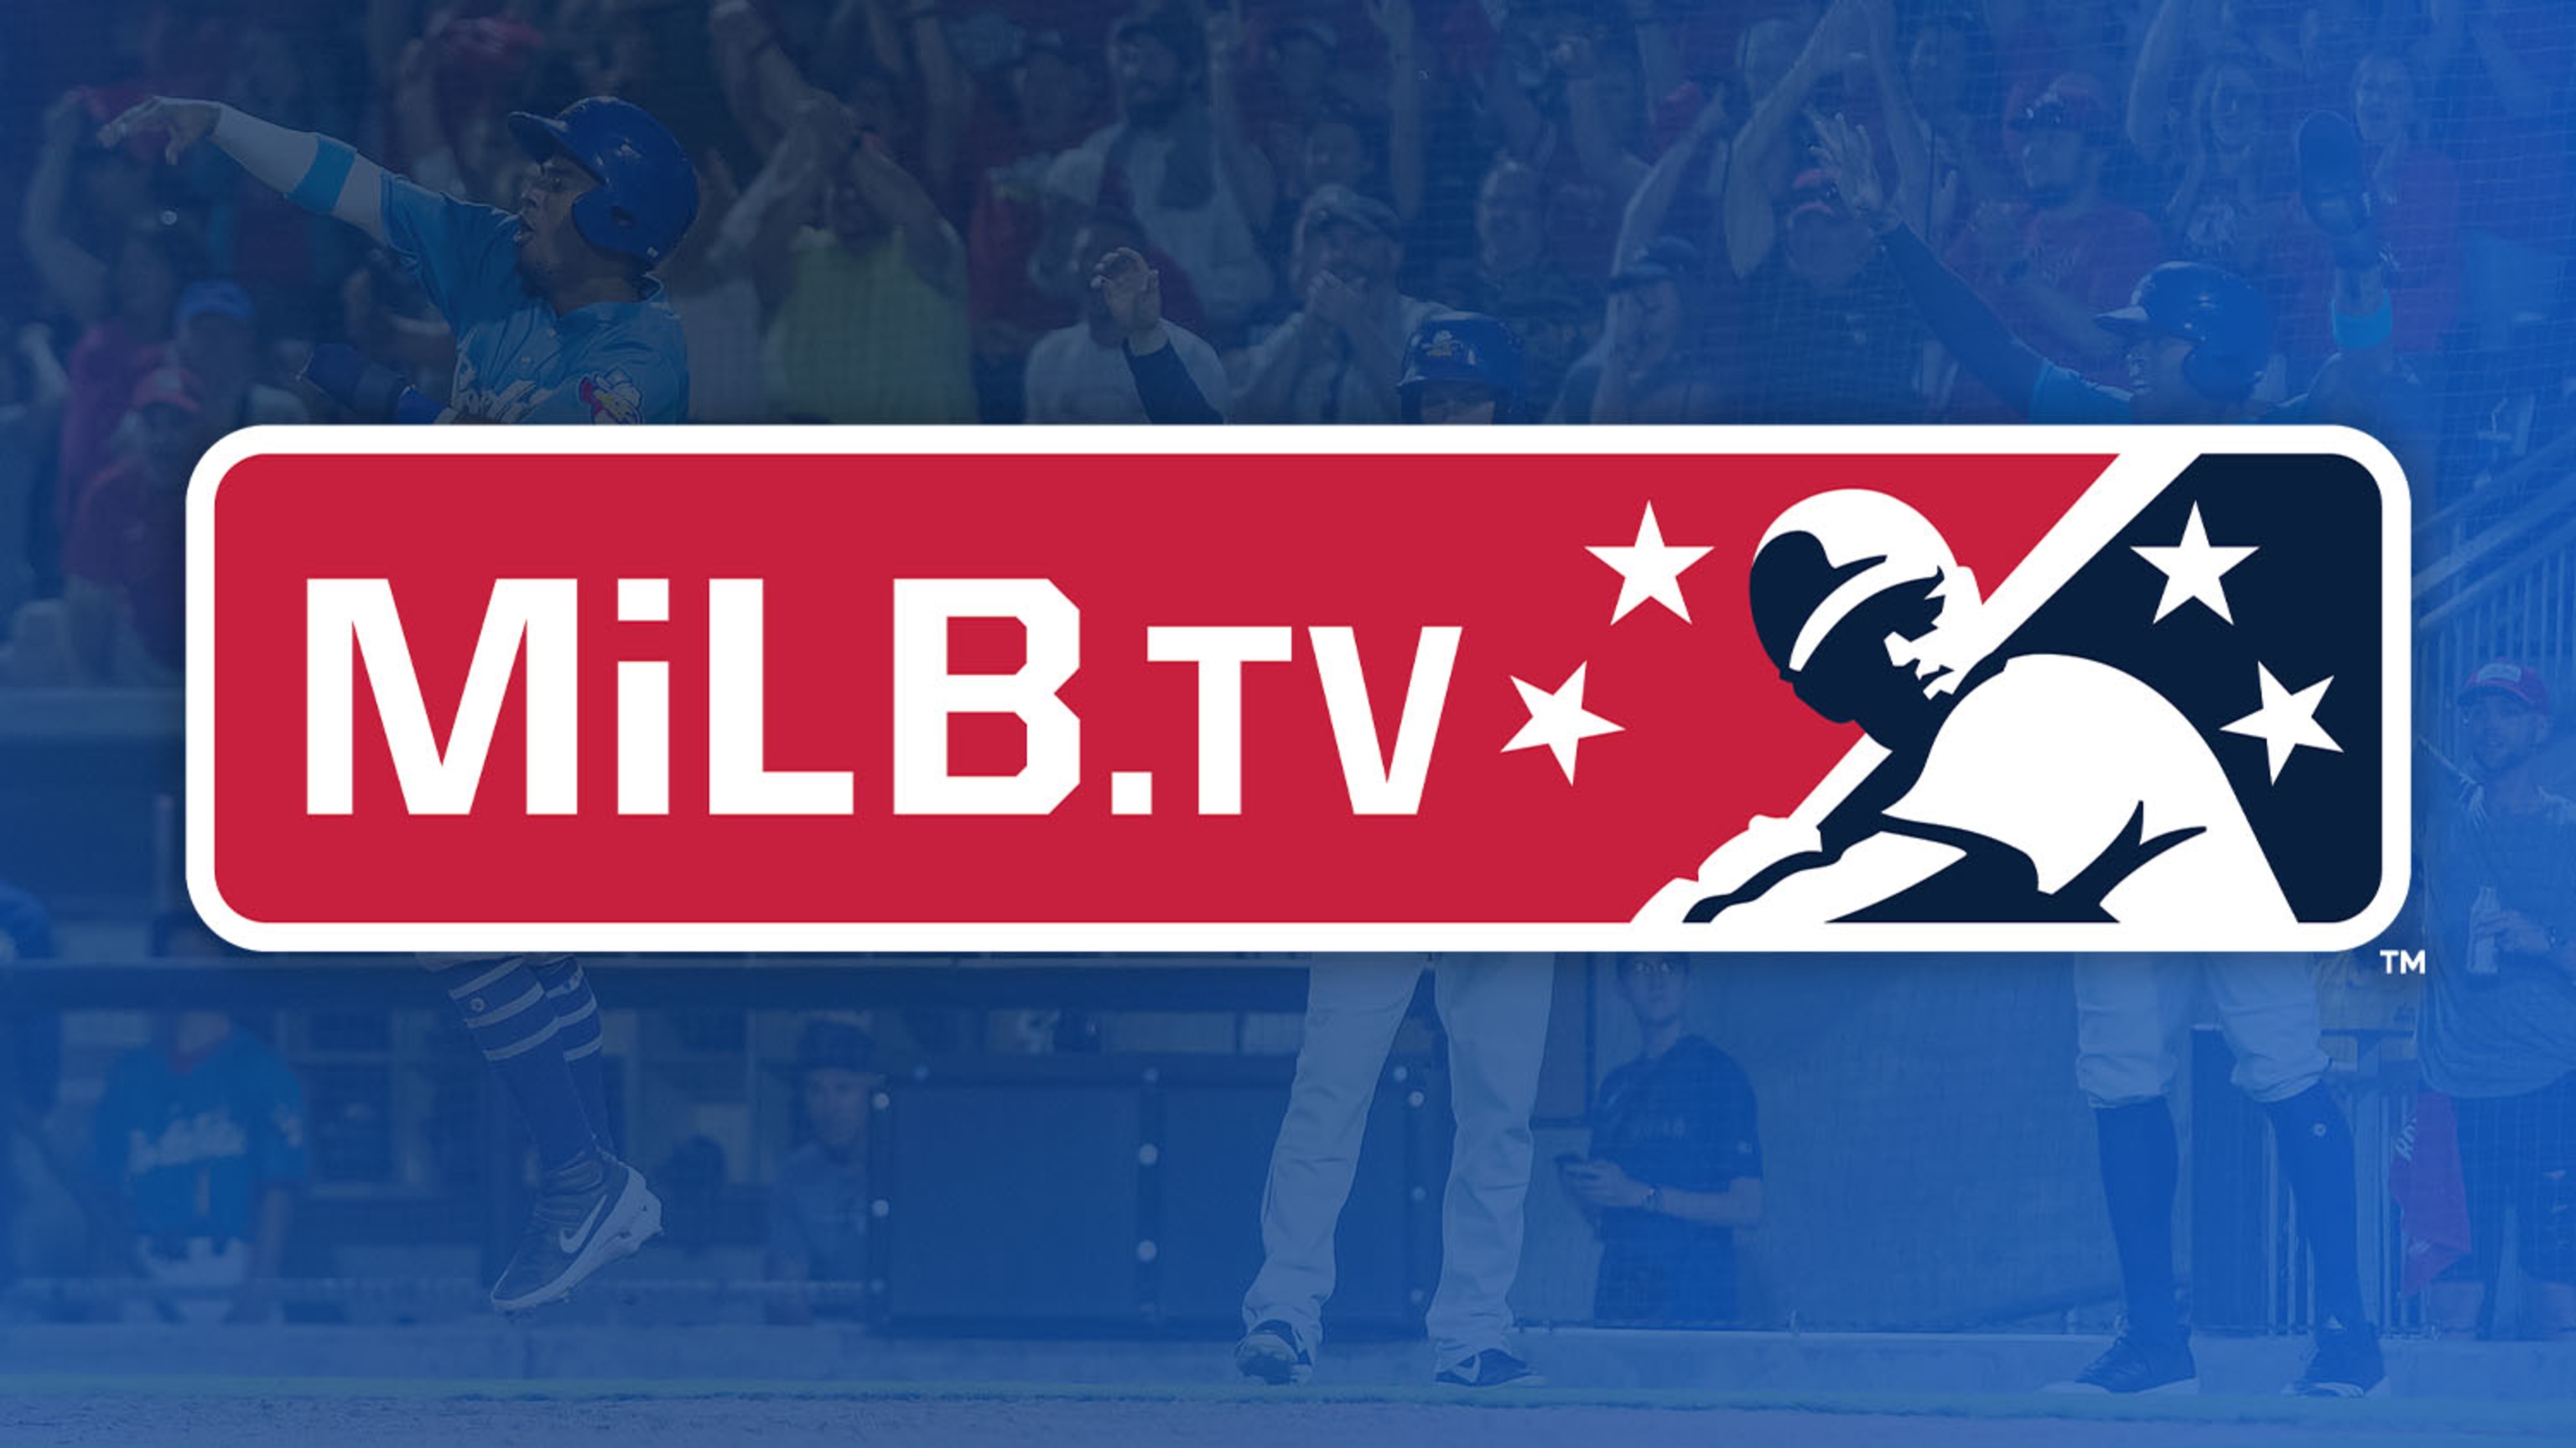 minor league baseball live streaming free